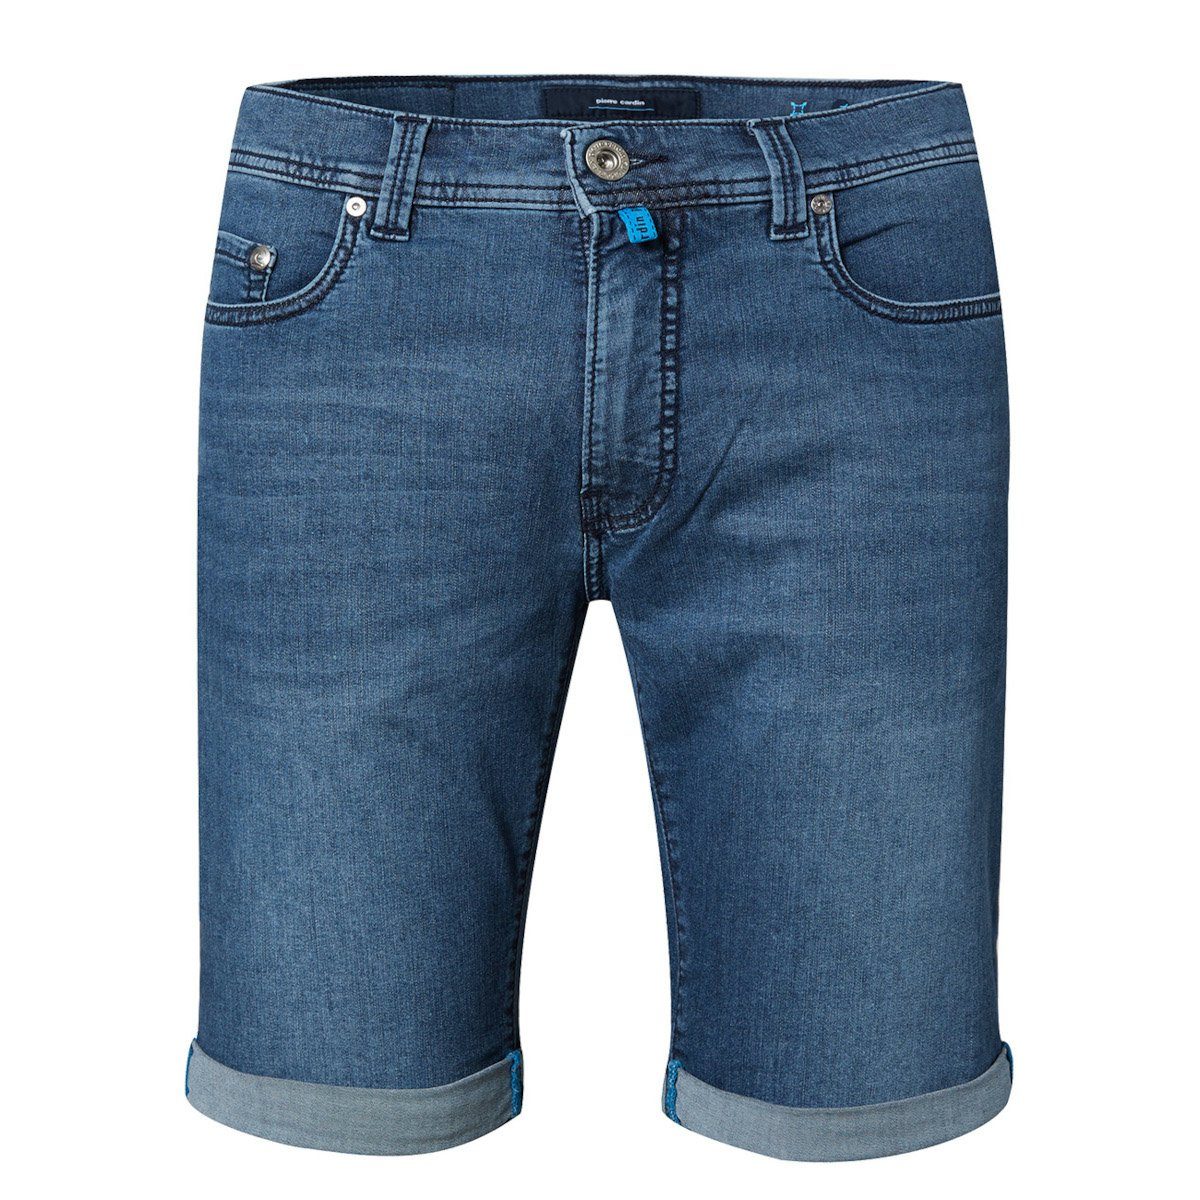 FUTURE fashion (6828) Pierre FLEX Pierre 34520 blue Shorts Shorts Cardin Cardin